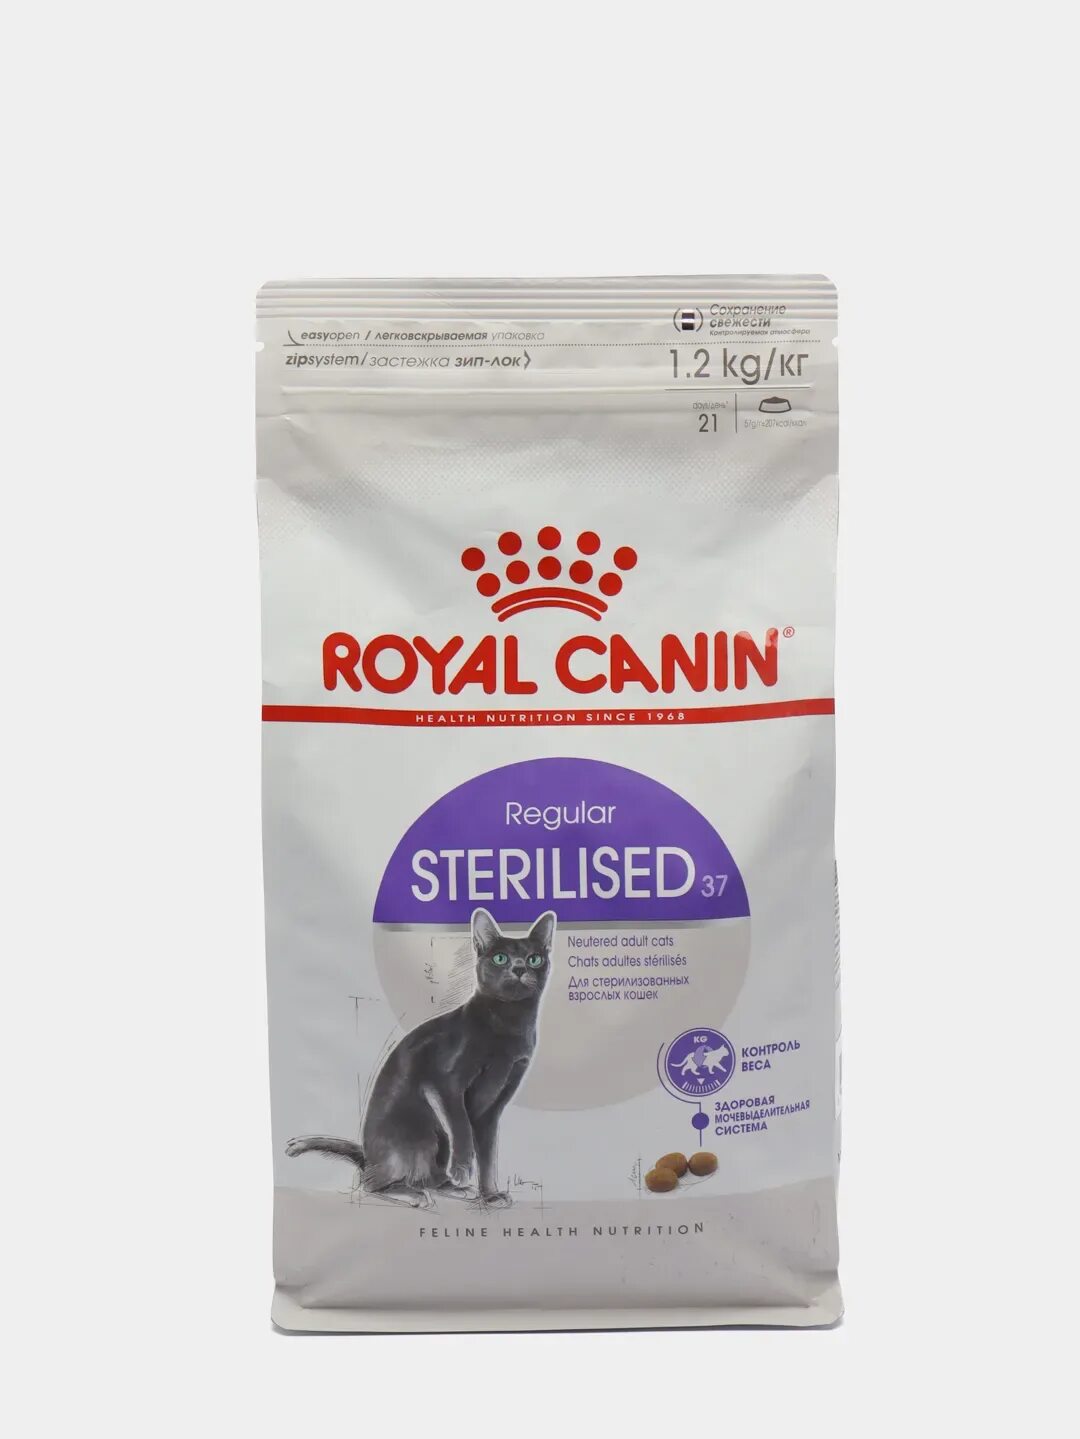 Royal canin для кошек sterilised 37. Корм Royal Canin Sterilised. Royal Canin Sterilised 37. Royal Canin Mini Sterilised кошки 2кг. Роял Канин для стерилизованных котят расход.